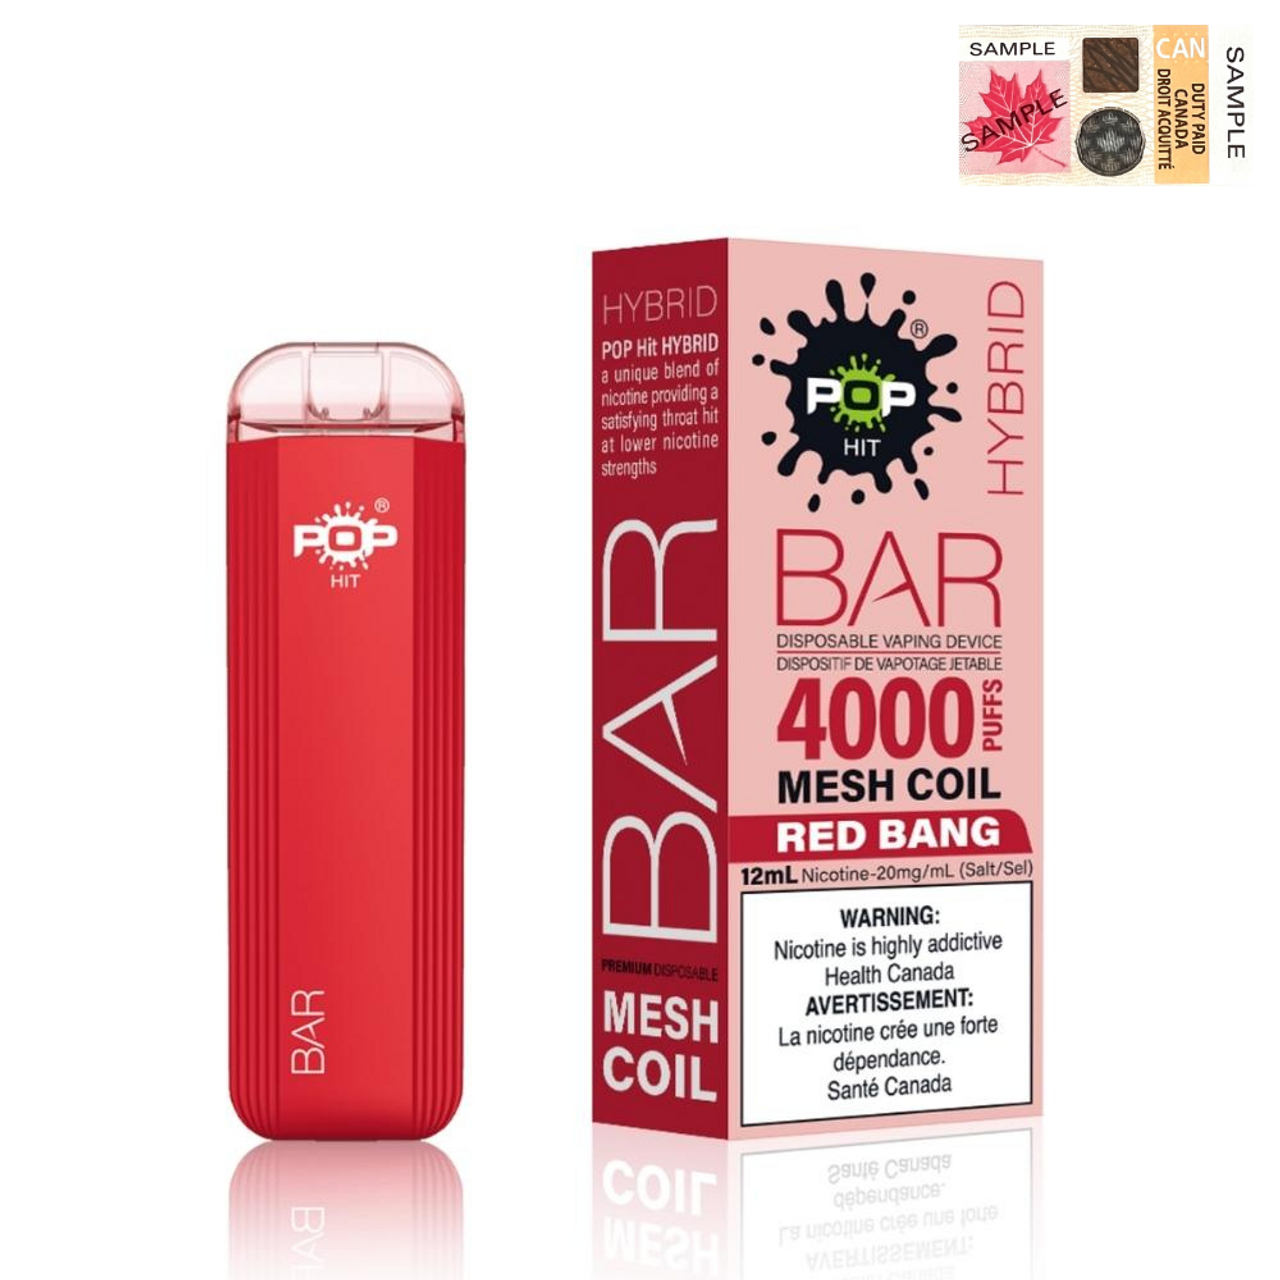 (Stamped) Red Bang Pop Hybrid Bar 4000 Puff Disposable Vape Ct 5